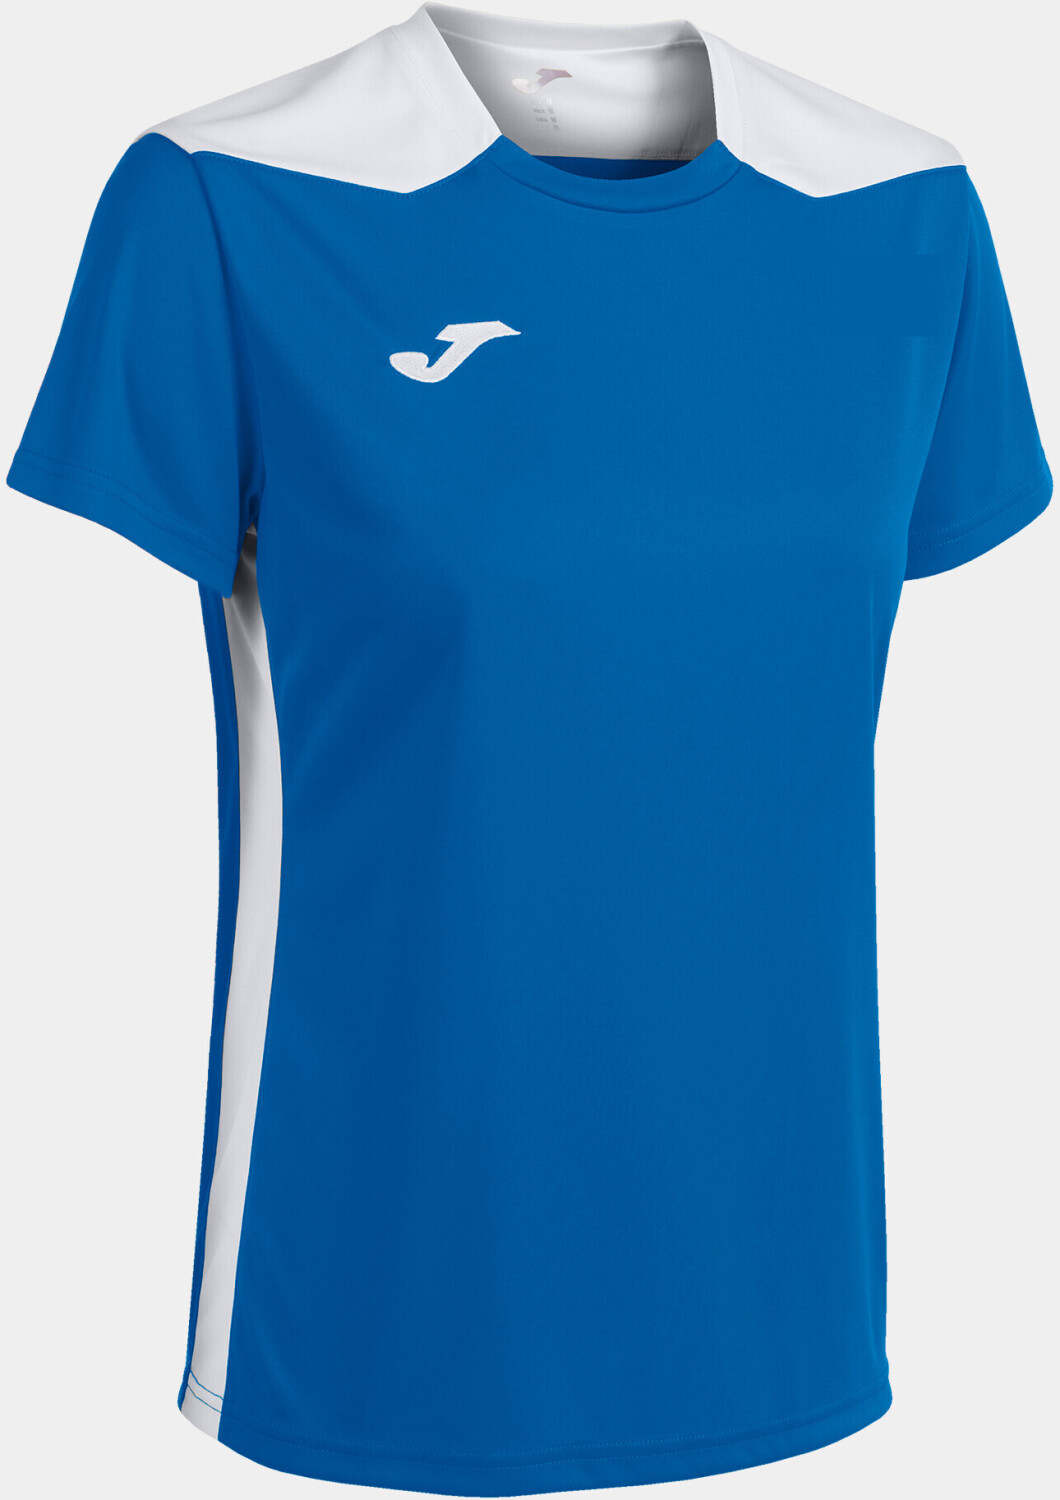 Photos - Football Kit Joma Championship VI Shirt Youth  royal blue/white (101822k)